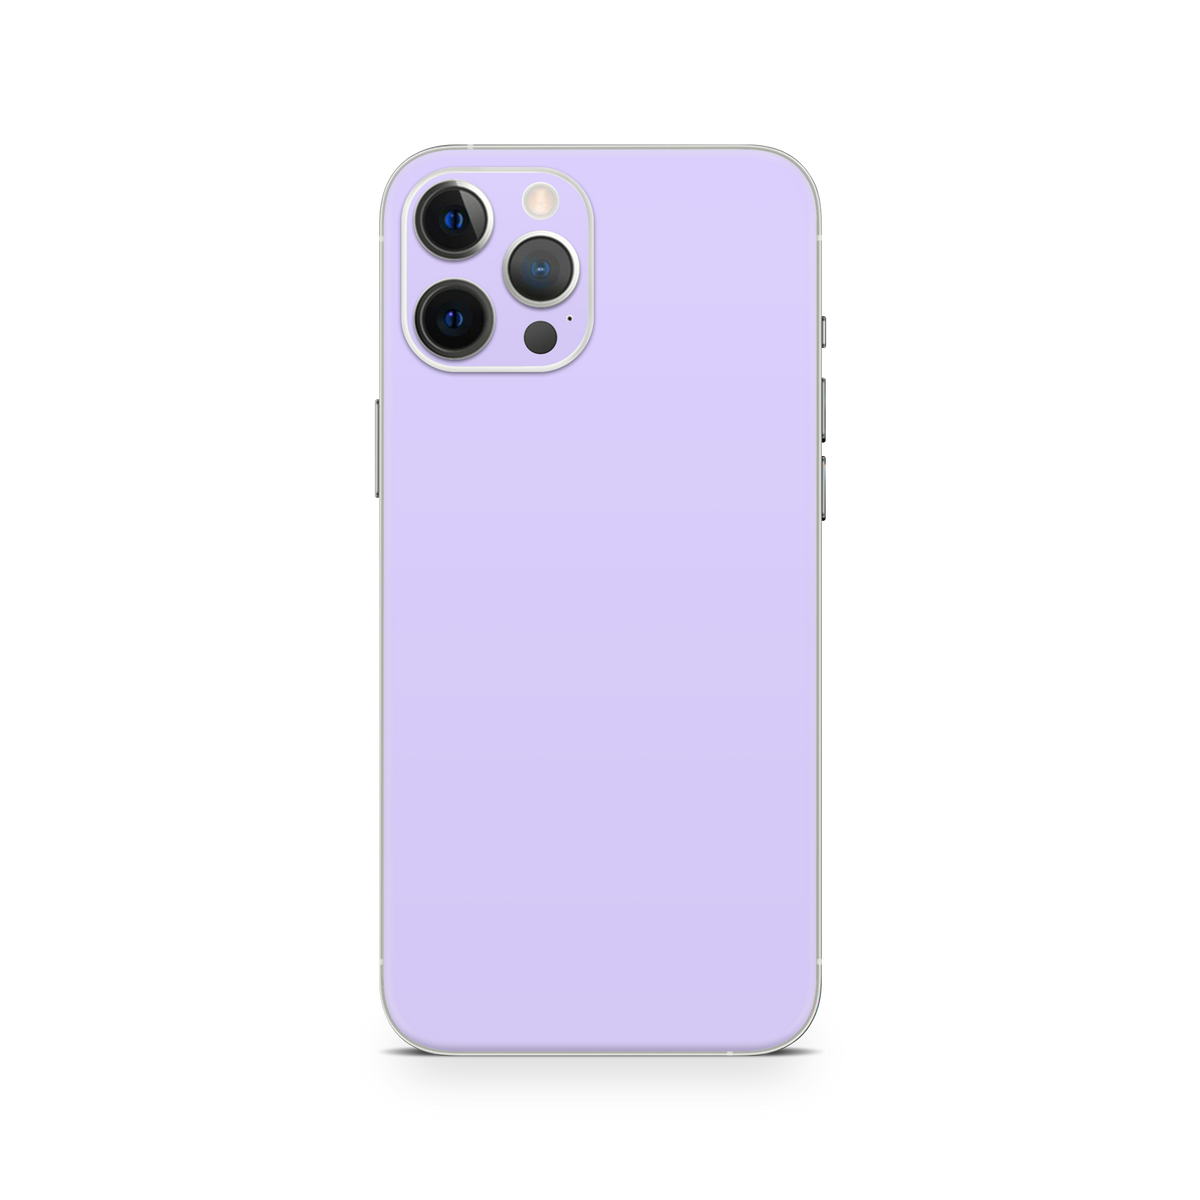 Apple iPhone 12 Pro max Light Lavender Skin